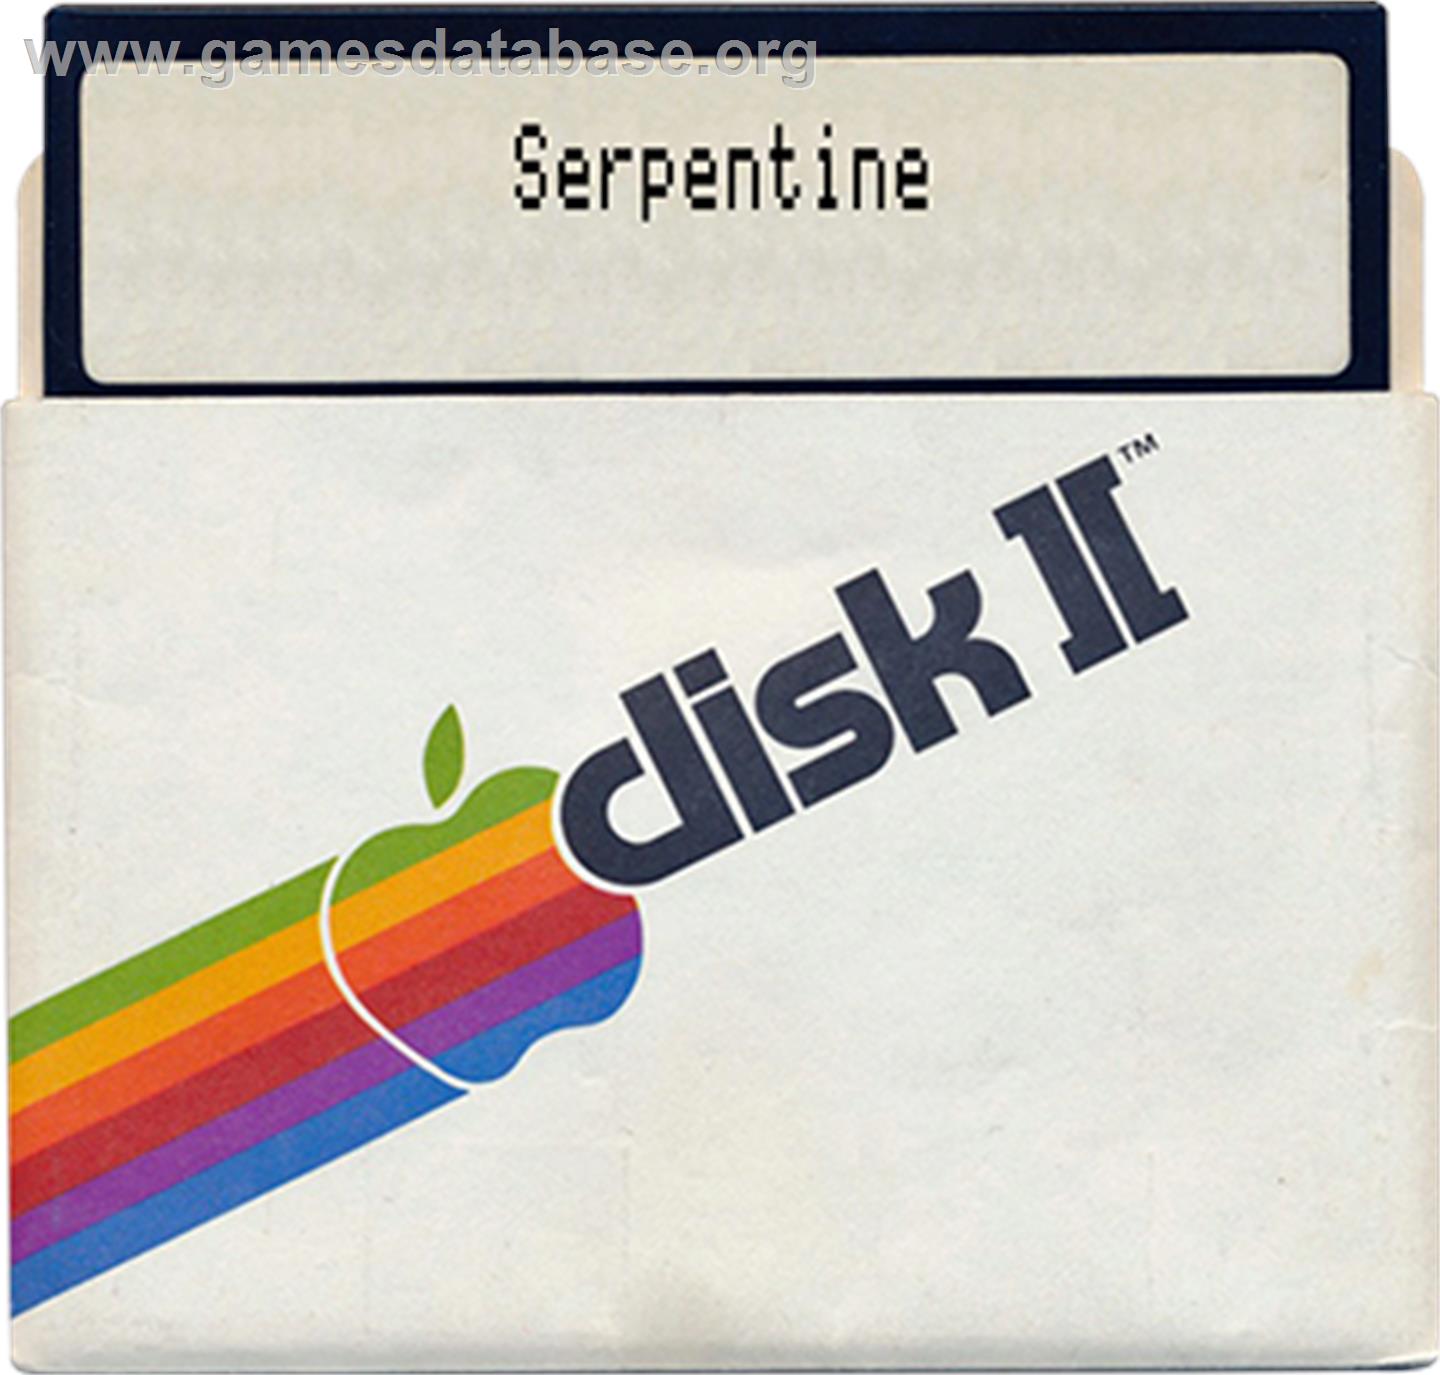 Serpentine - Apple II - Artwork - Disc